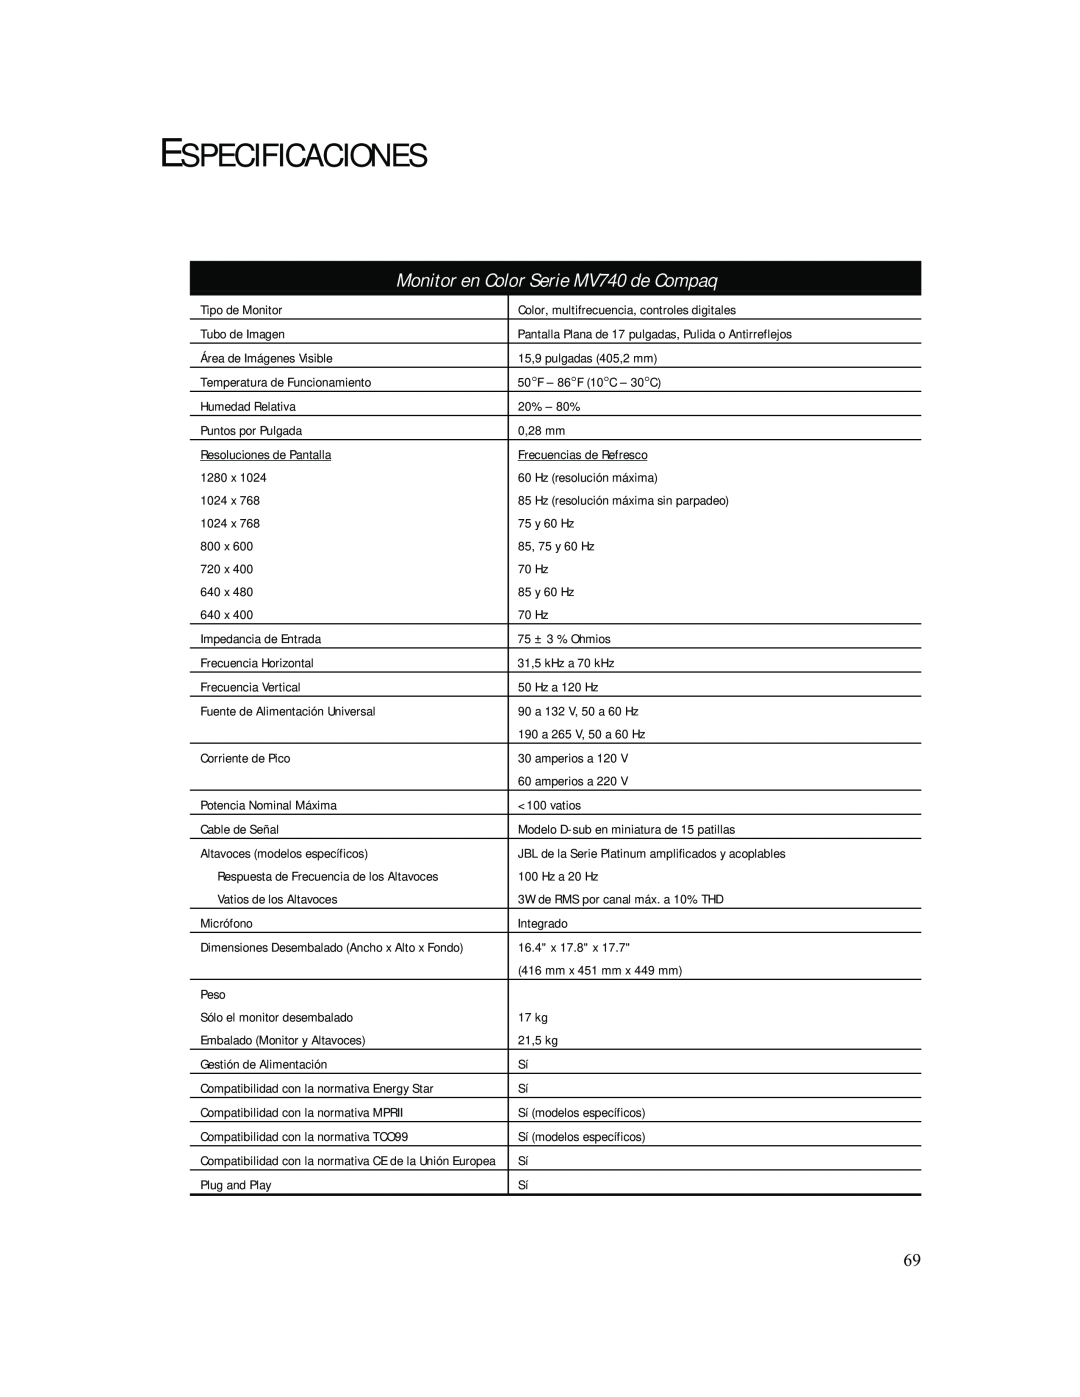 Compaq manual Especificaciones, Monitor en Color Serie MV740 de Compaq 